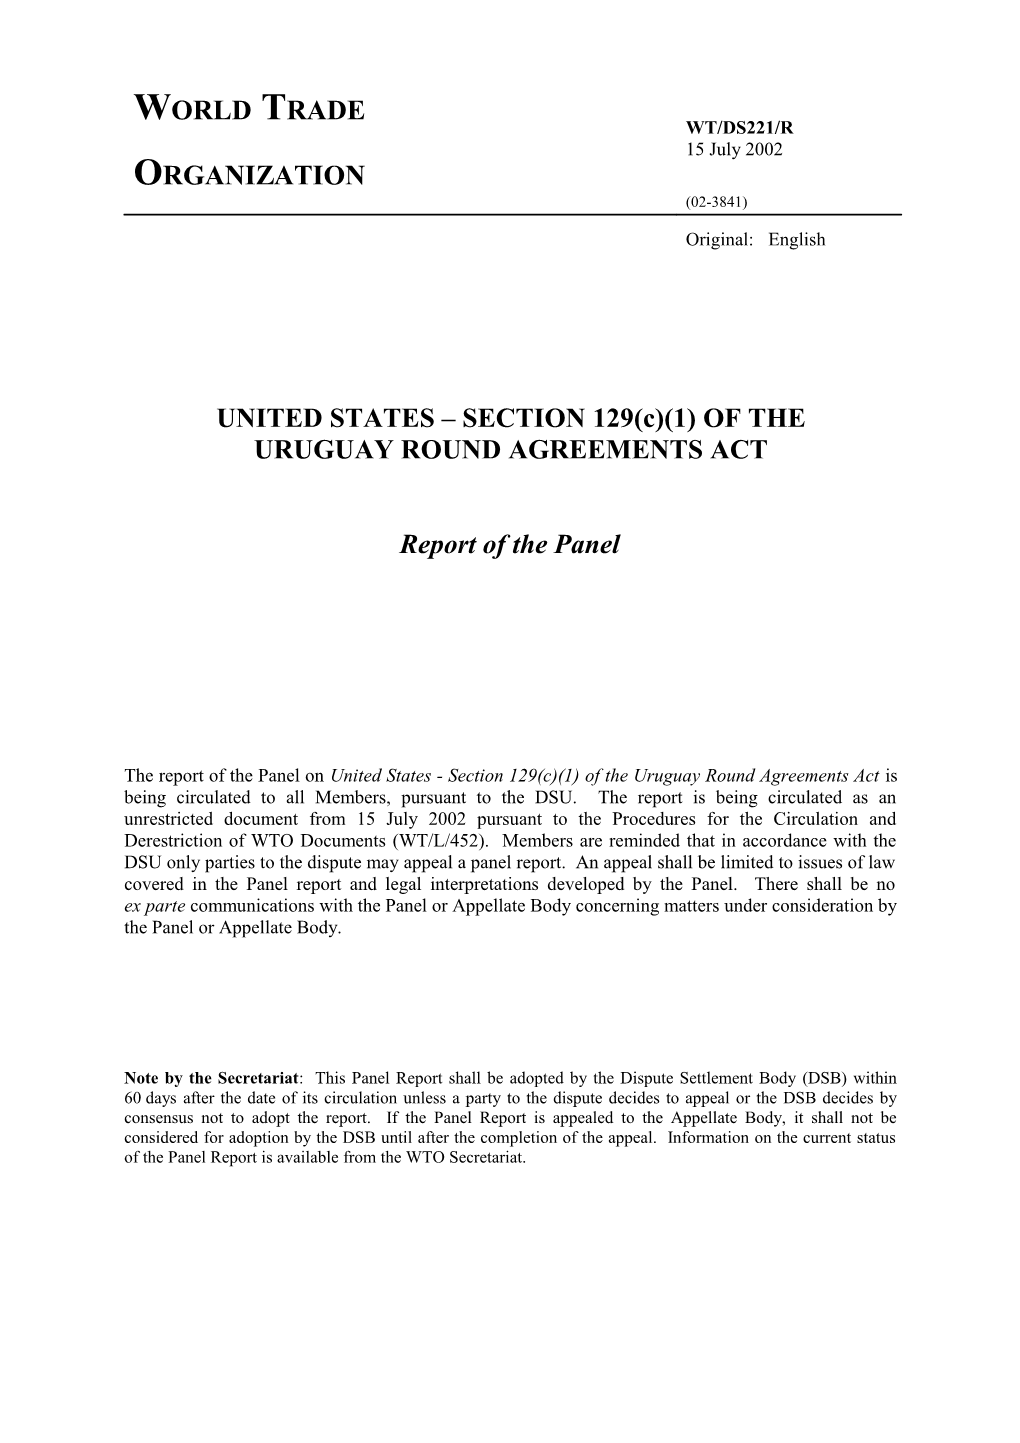 Uruguay Round Agreements Act